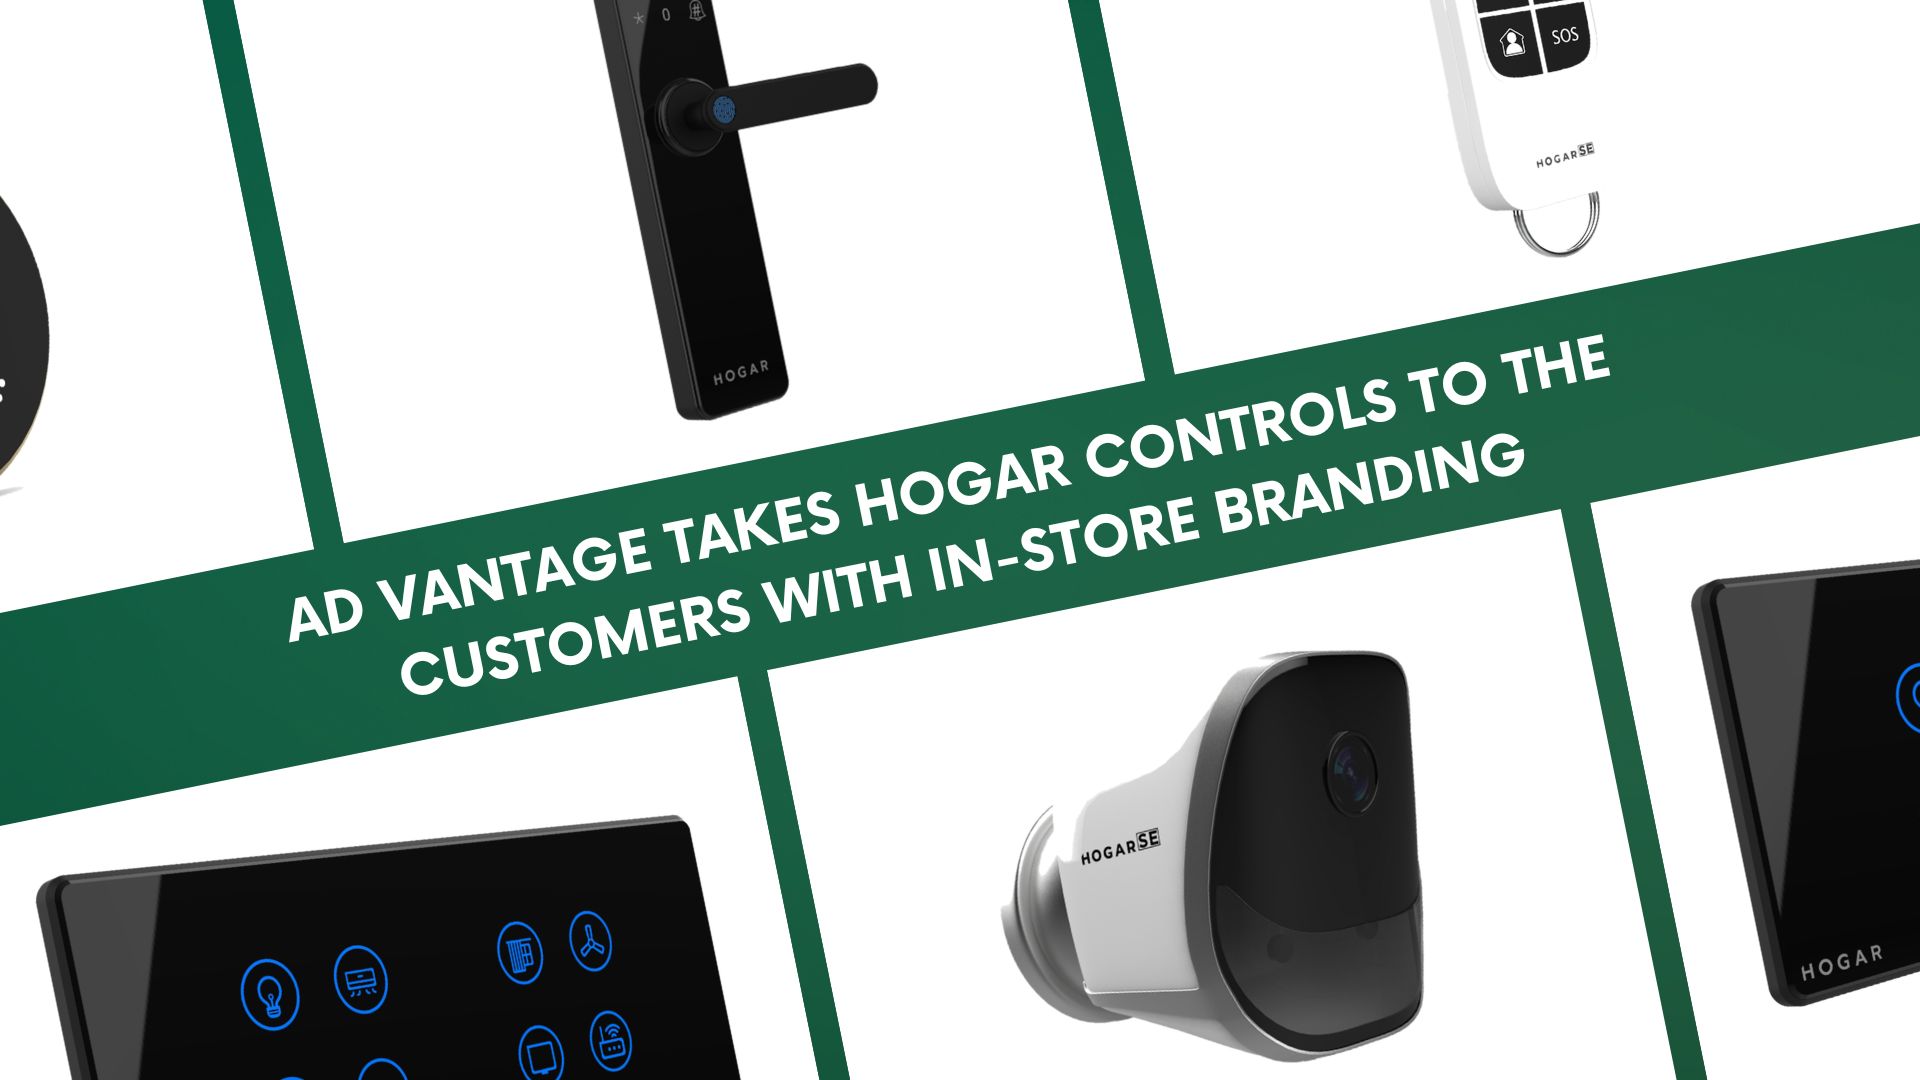 in-store-branding-for hogar-controls